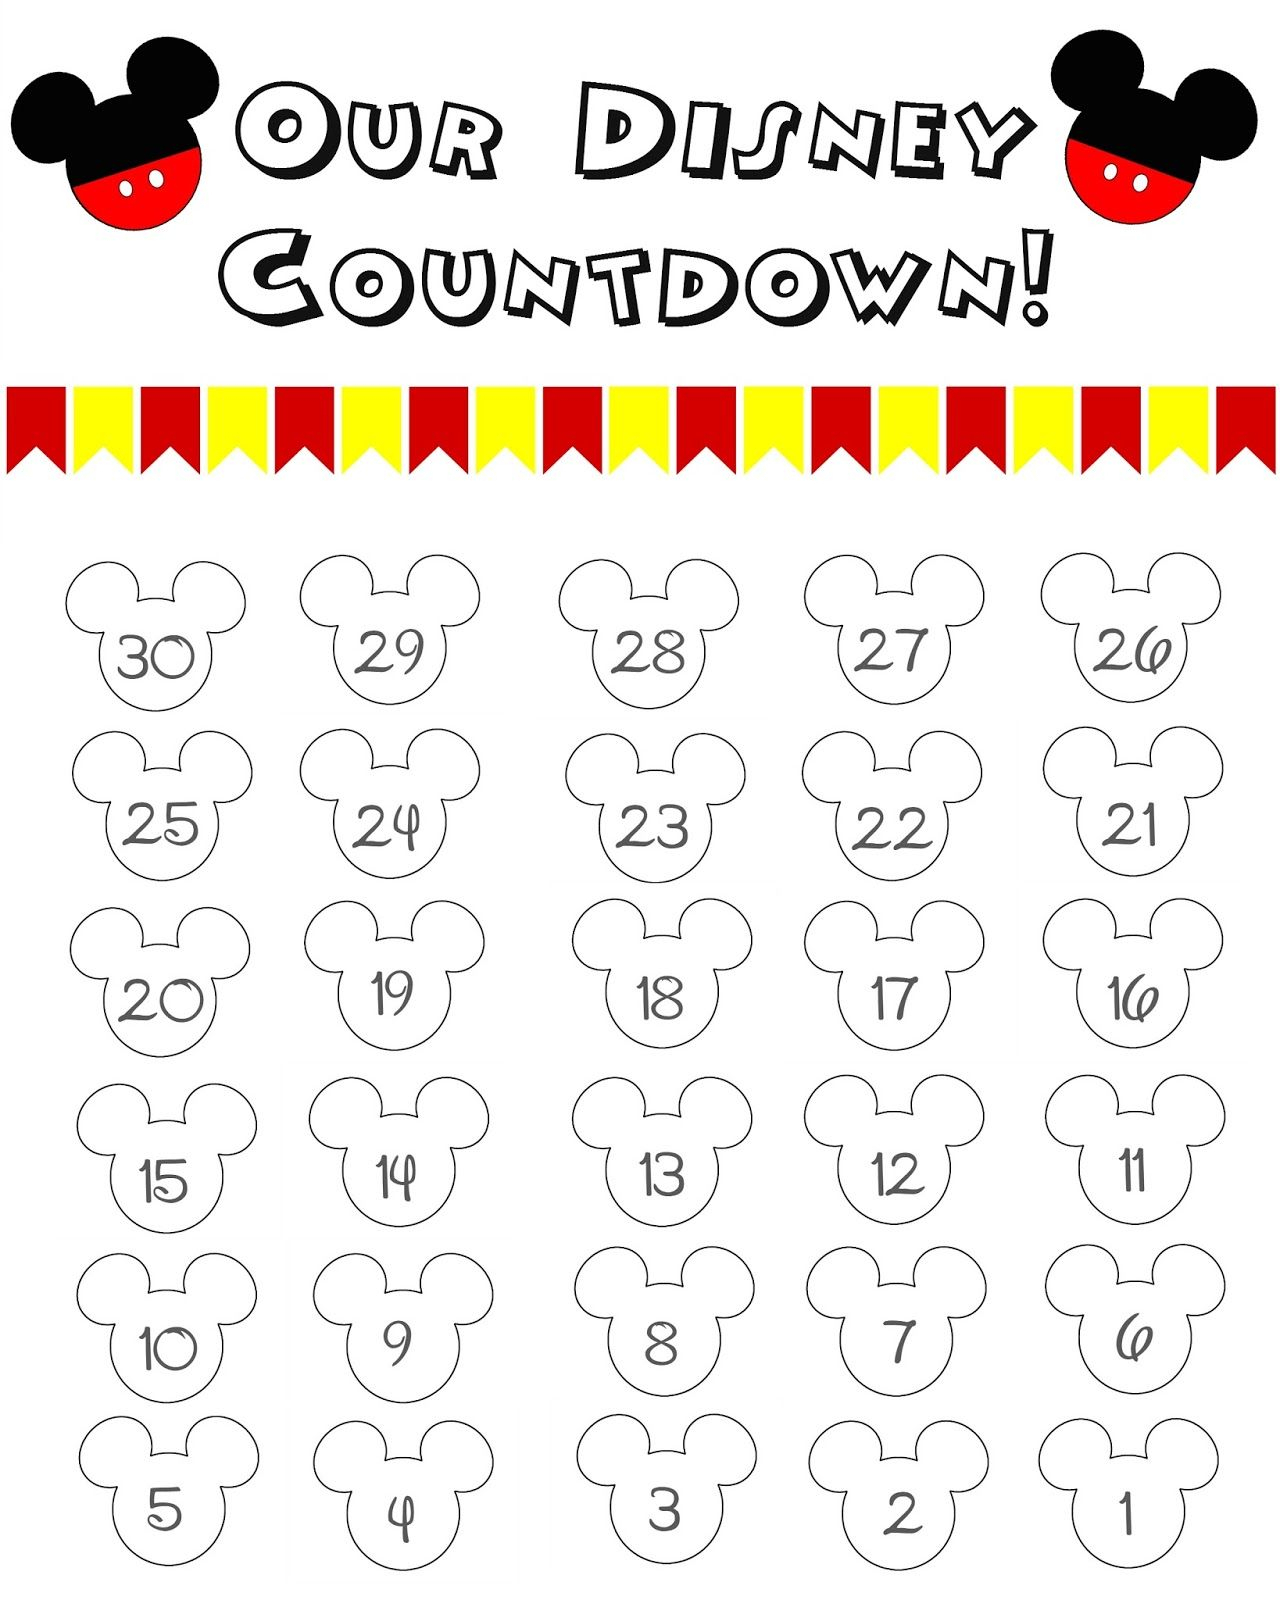 Disney World Countdown Calendar - Free Printable | The Momma